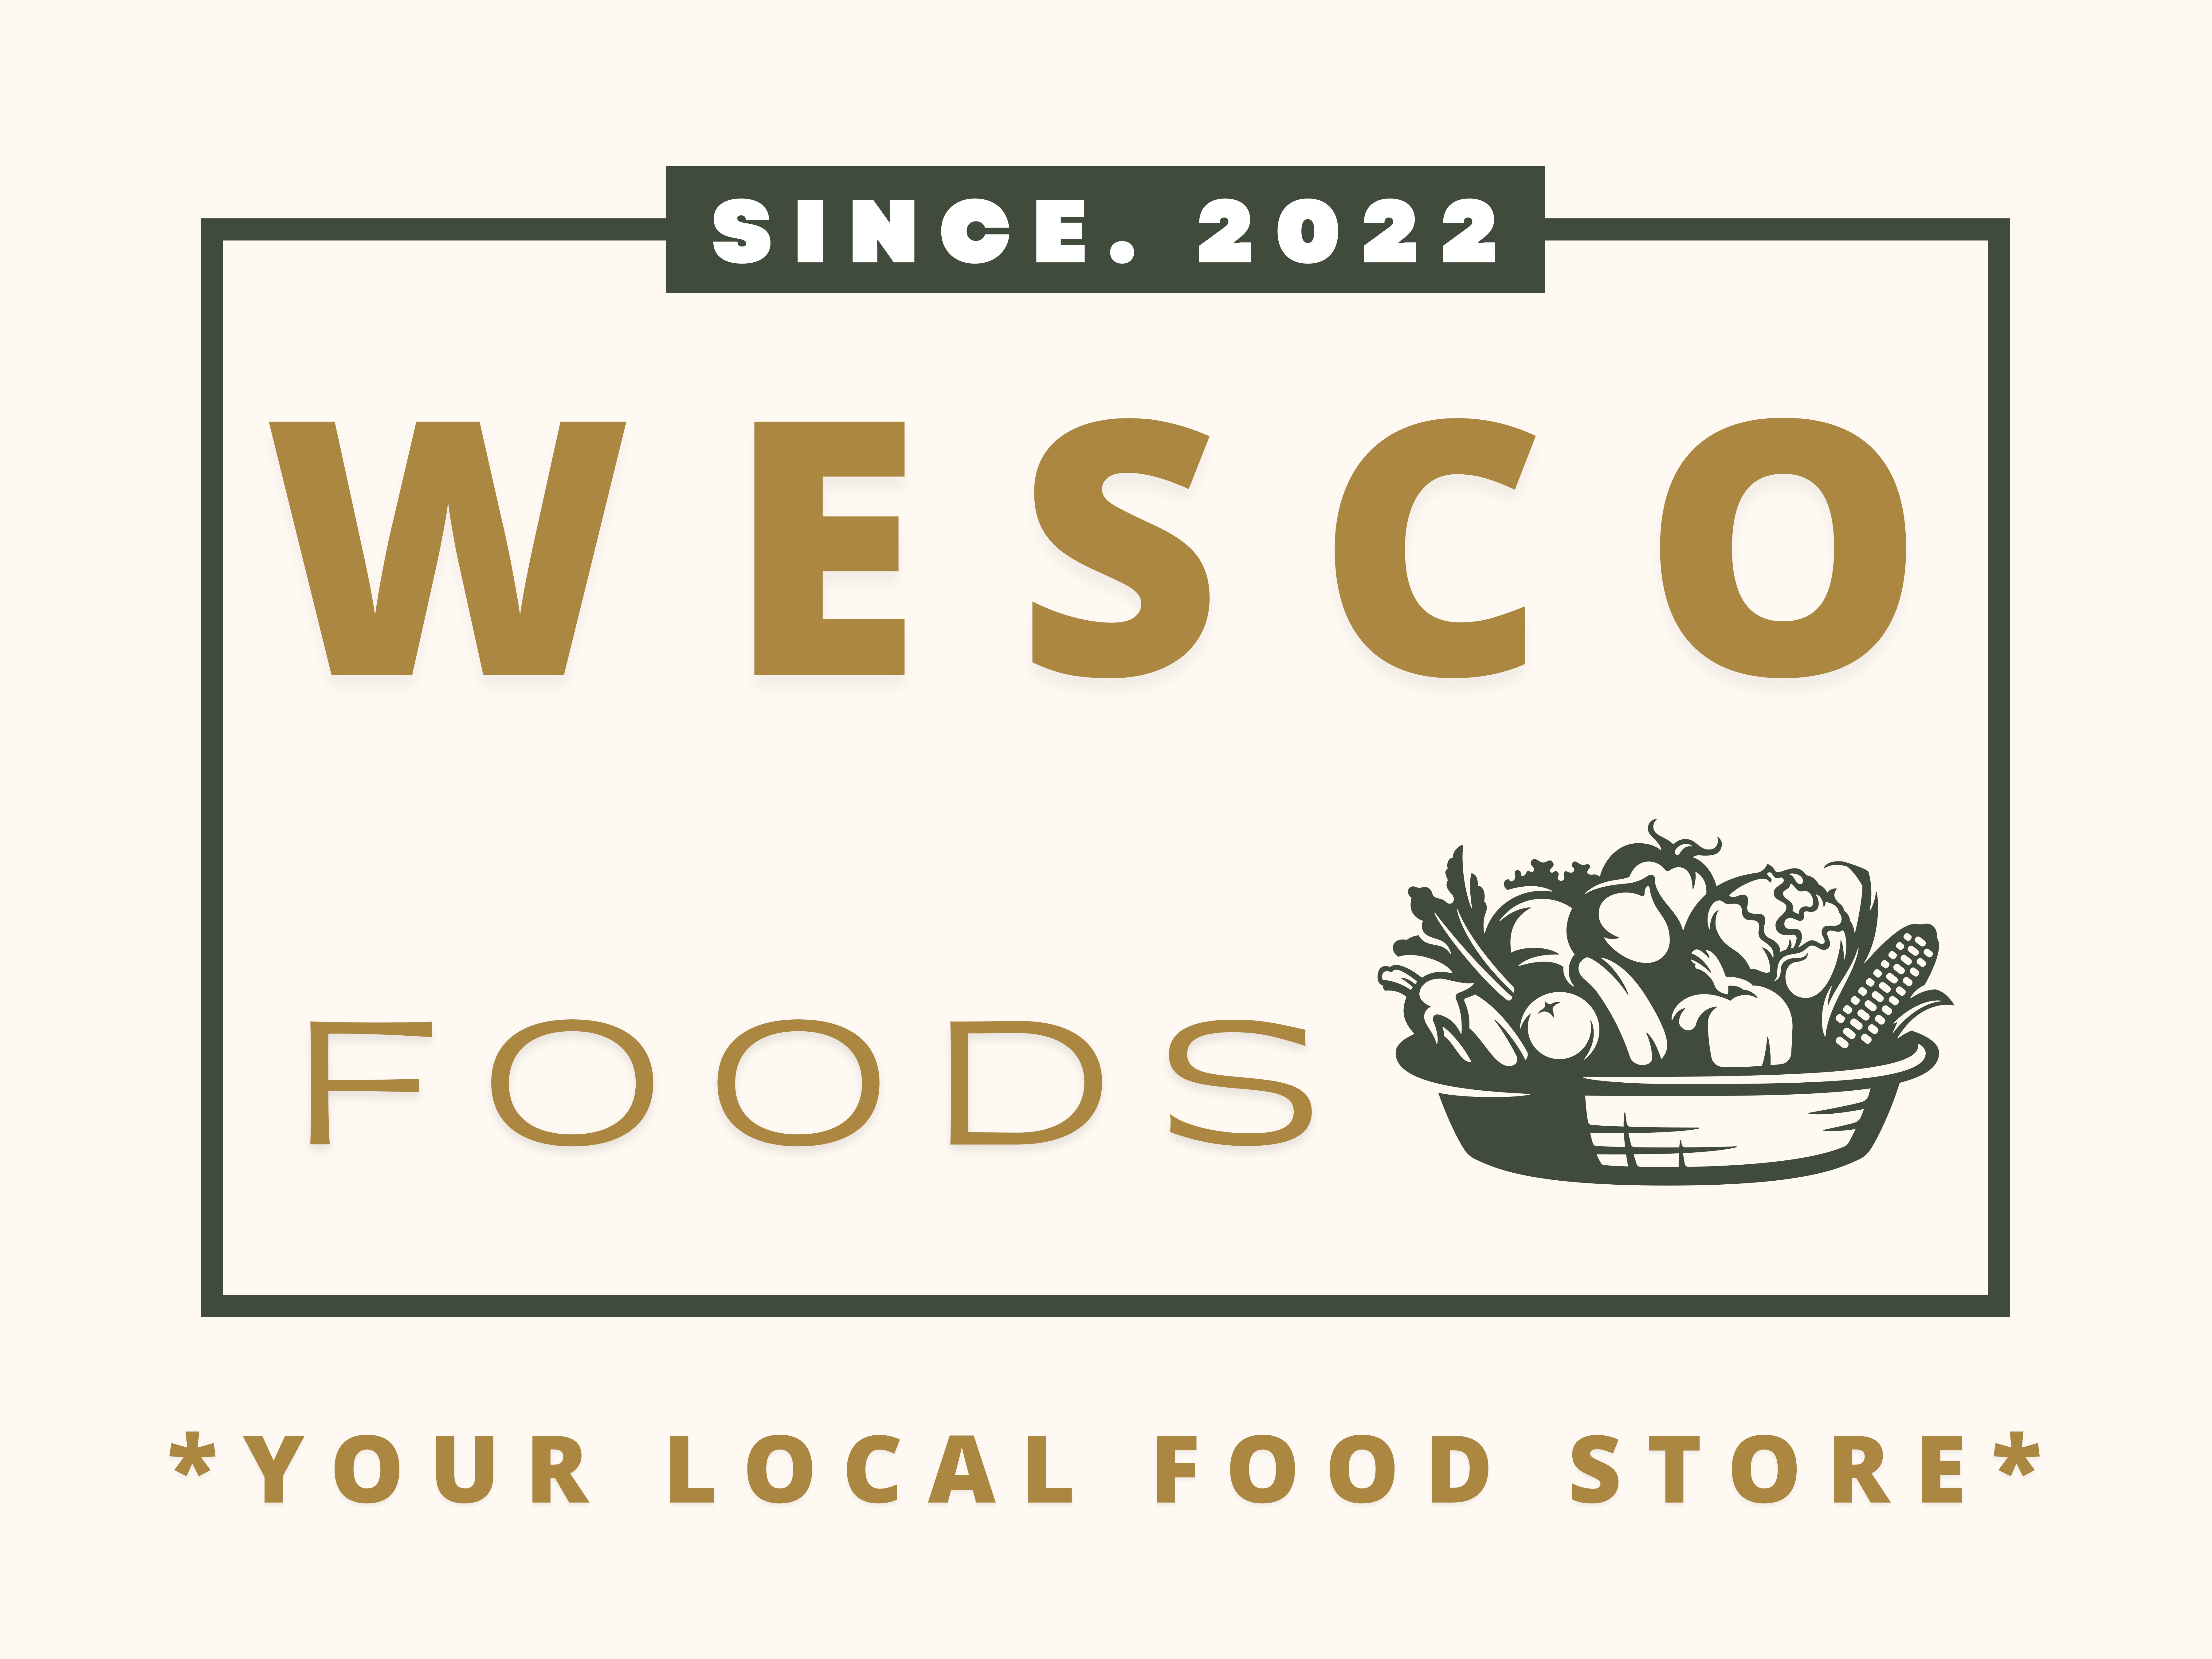 Wesco Foods logo image.